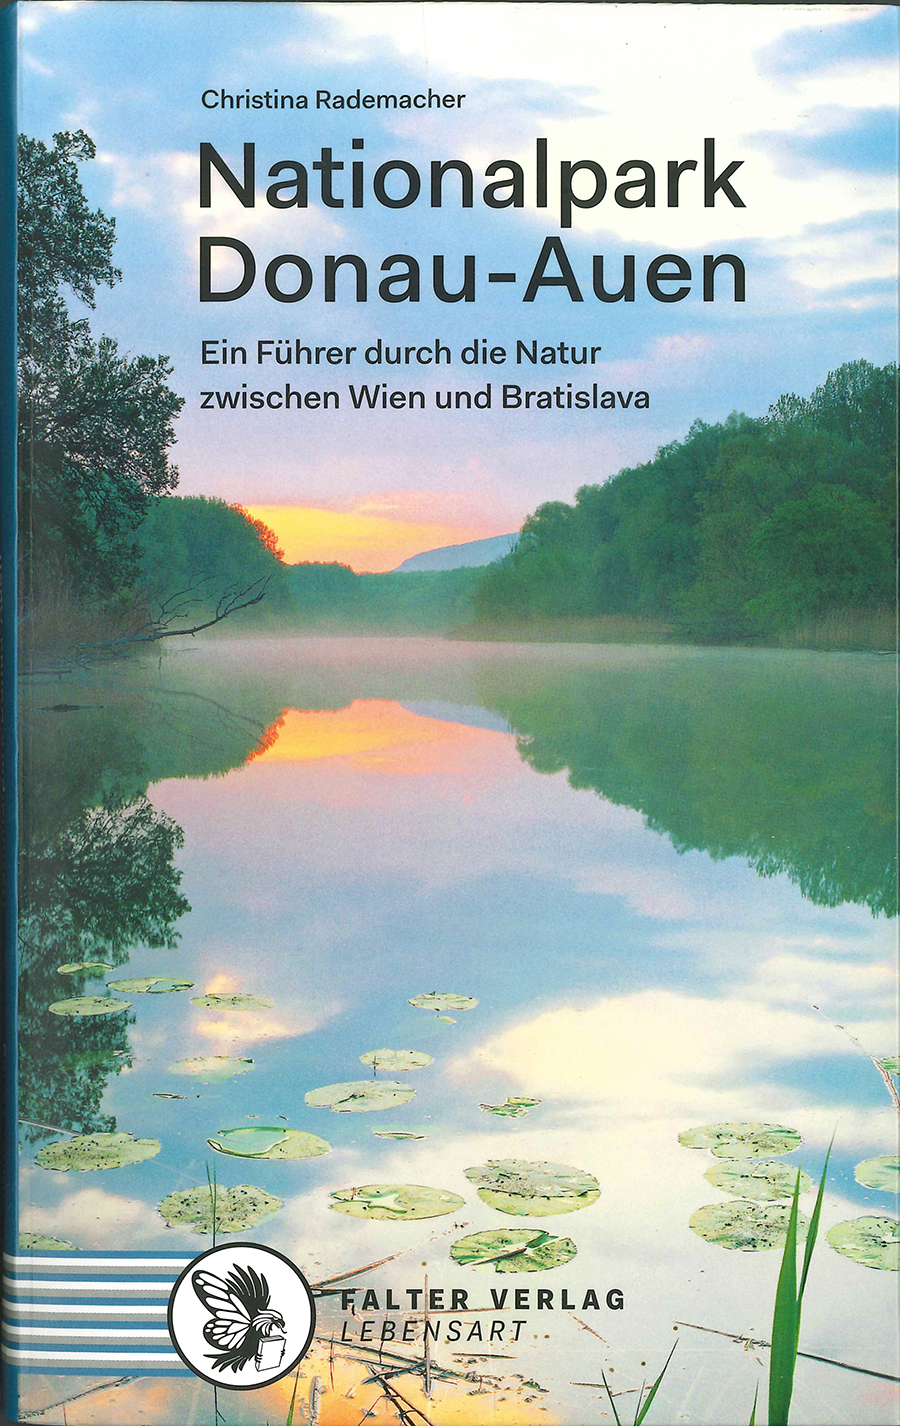 Nationalpark-Donau-Auen-Fuhrer-NP-Donau-Auen_1.jpg